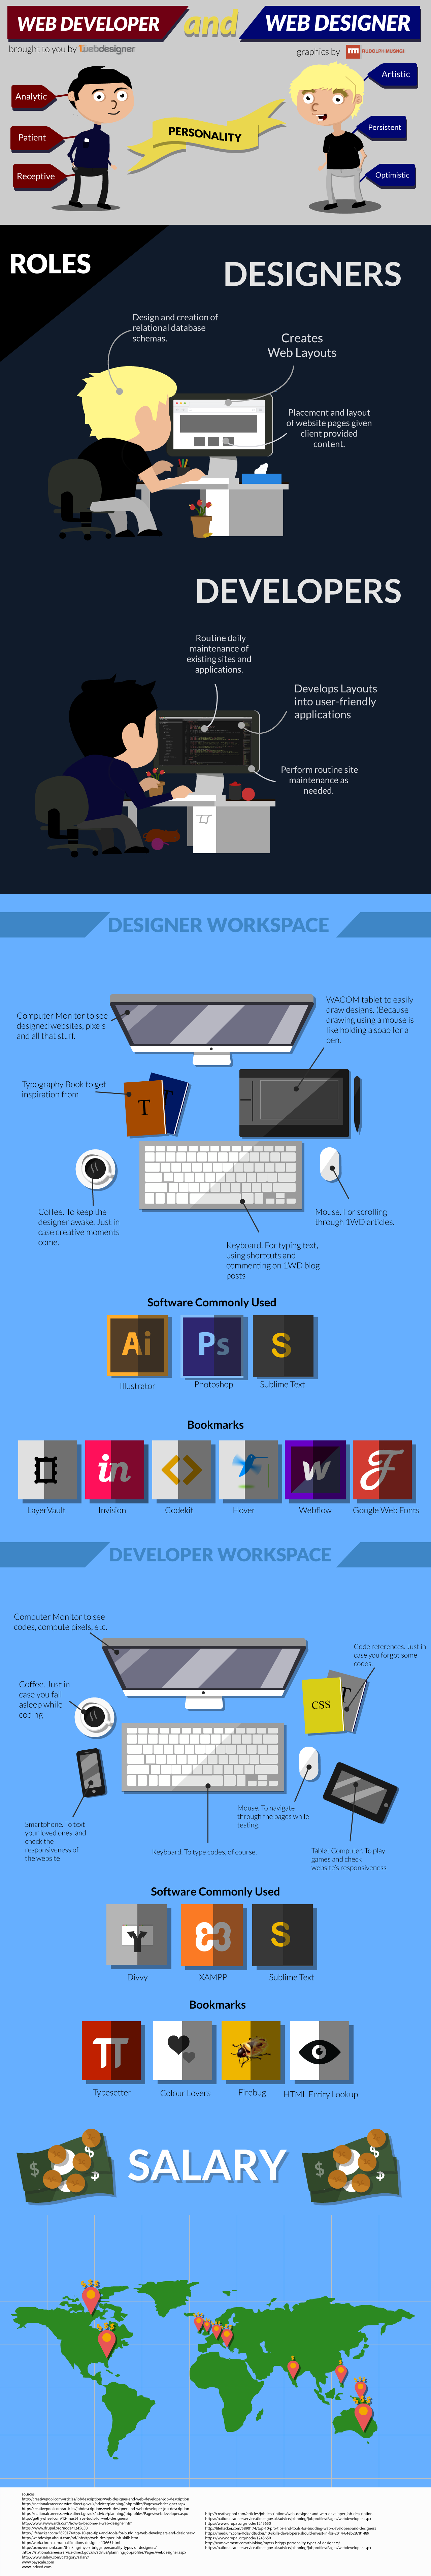 Web Developer vs. Web Designer {Infographic}